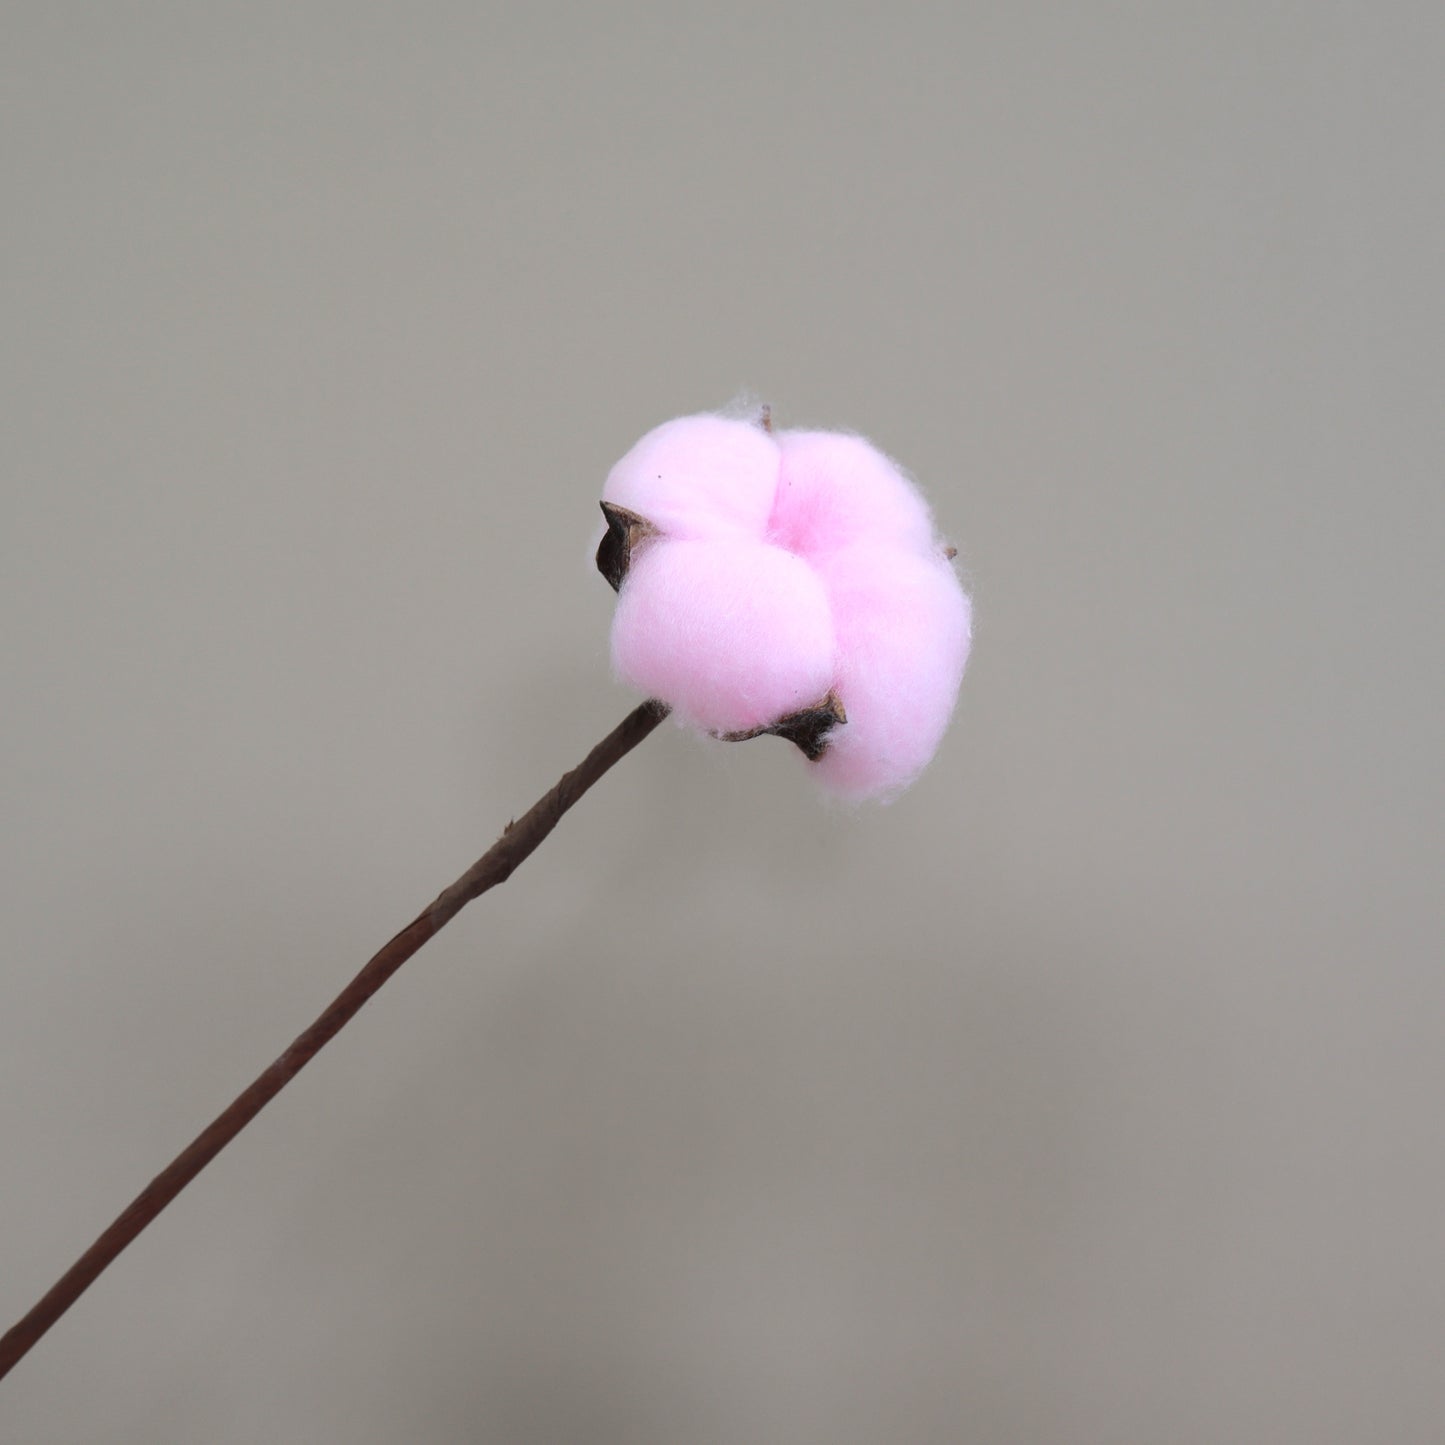 Cotton 10 stems Pink